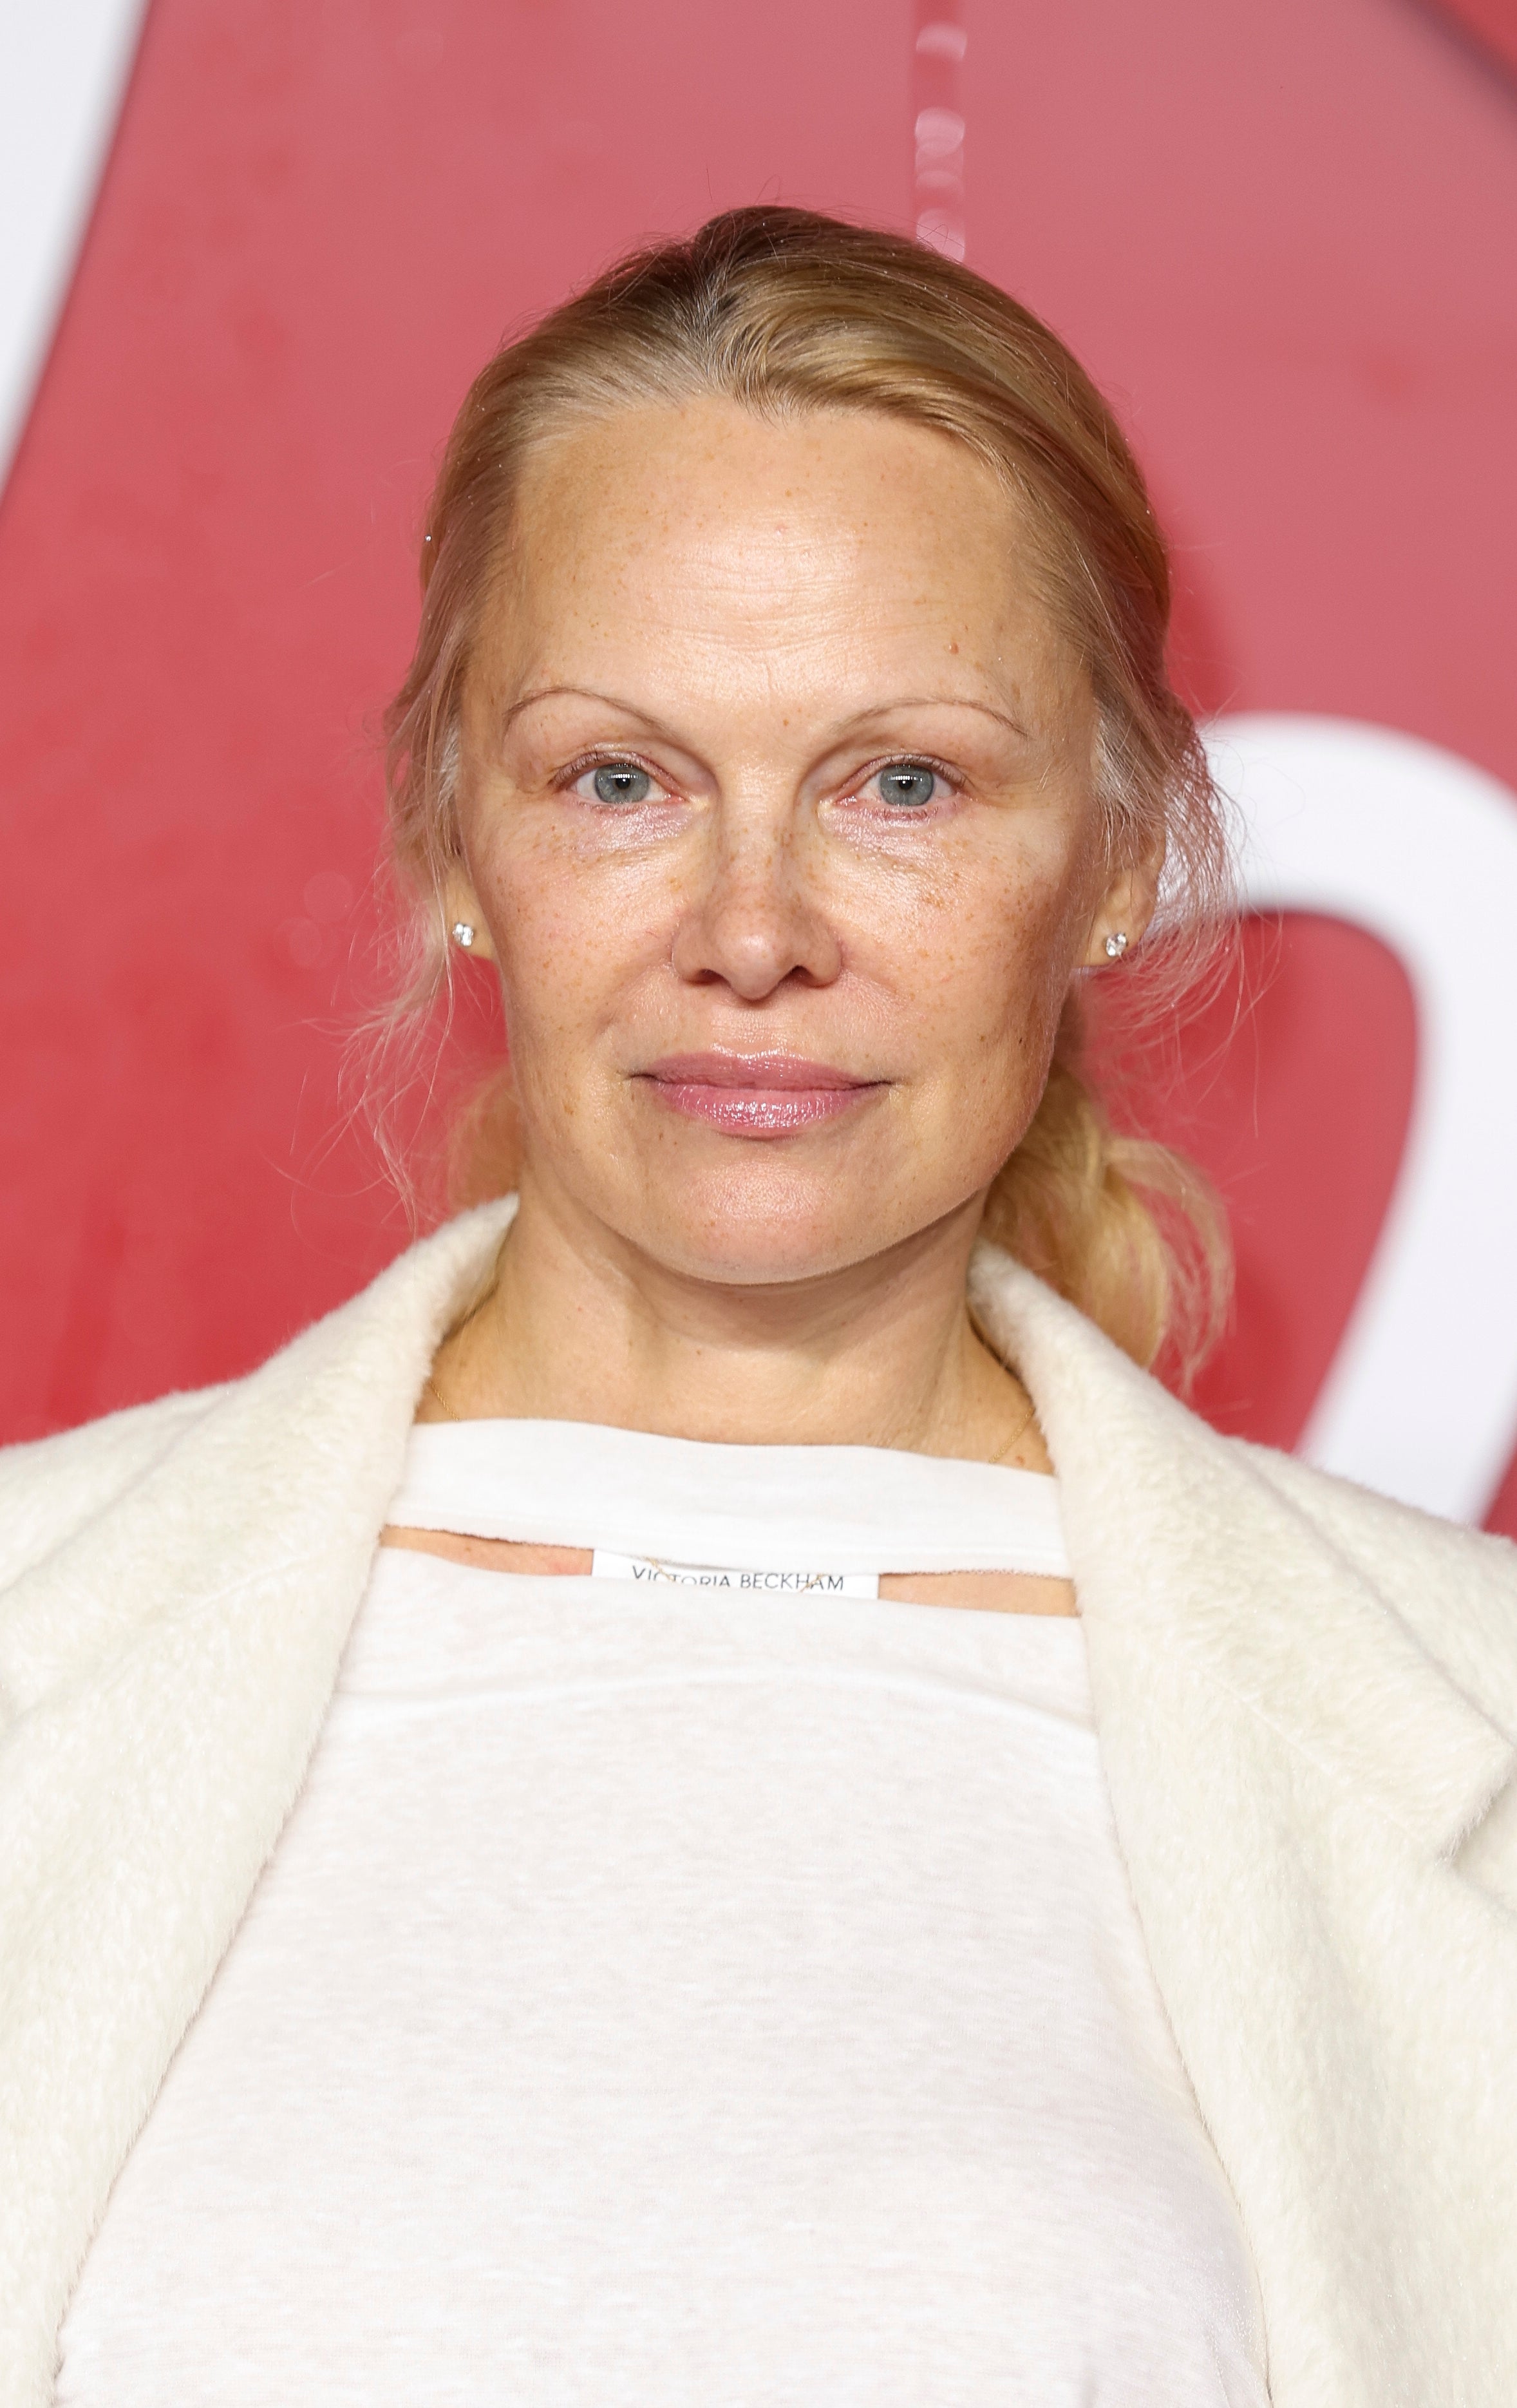 Close-up of Pamela sans makeup at a media event